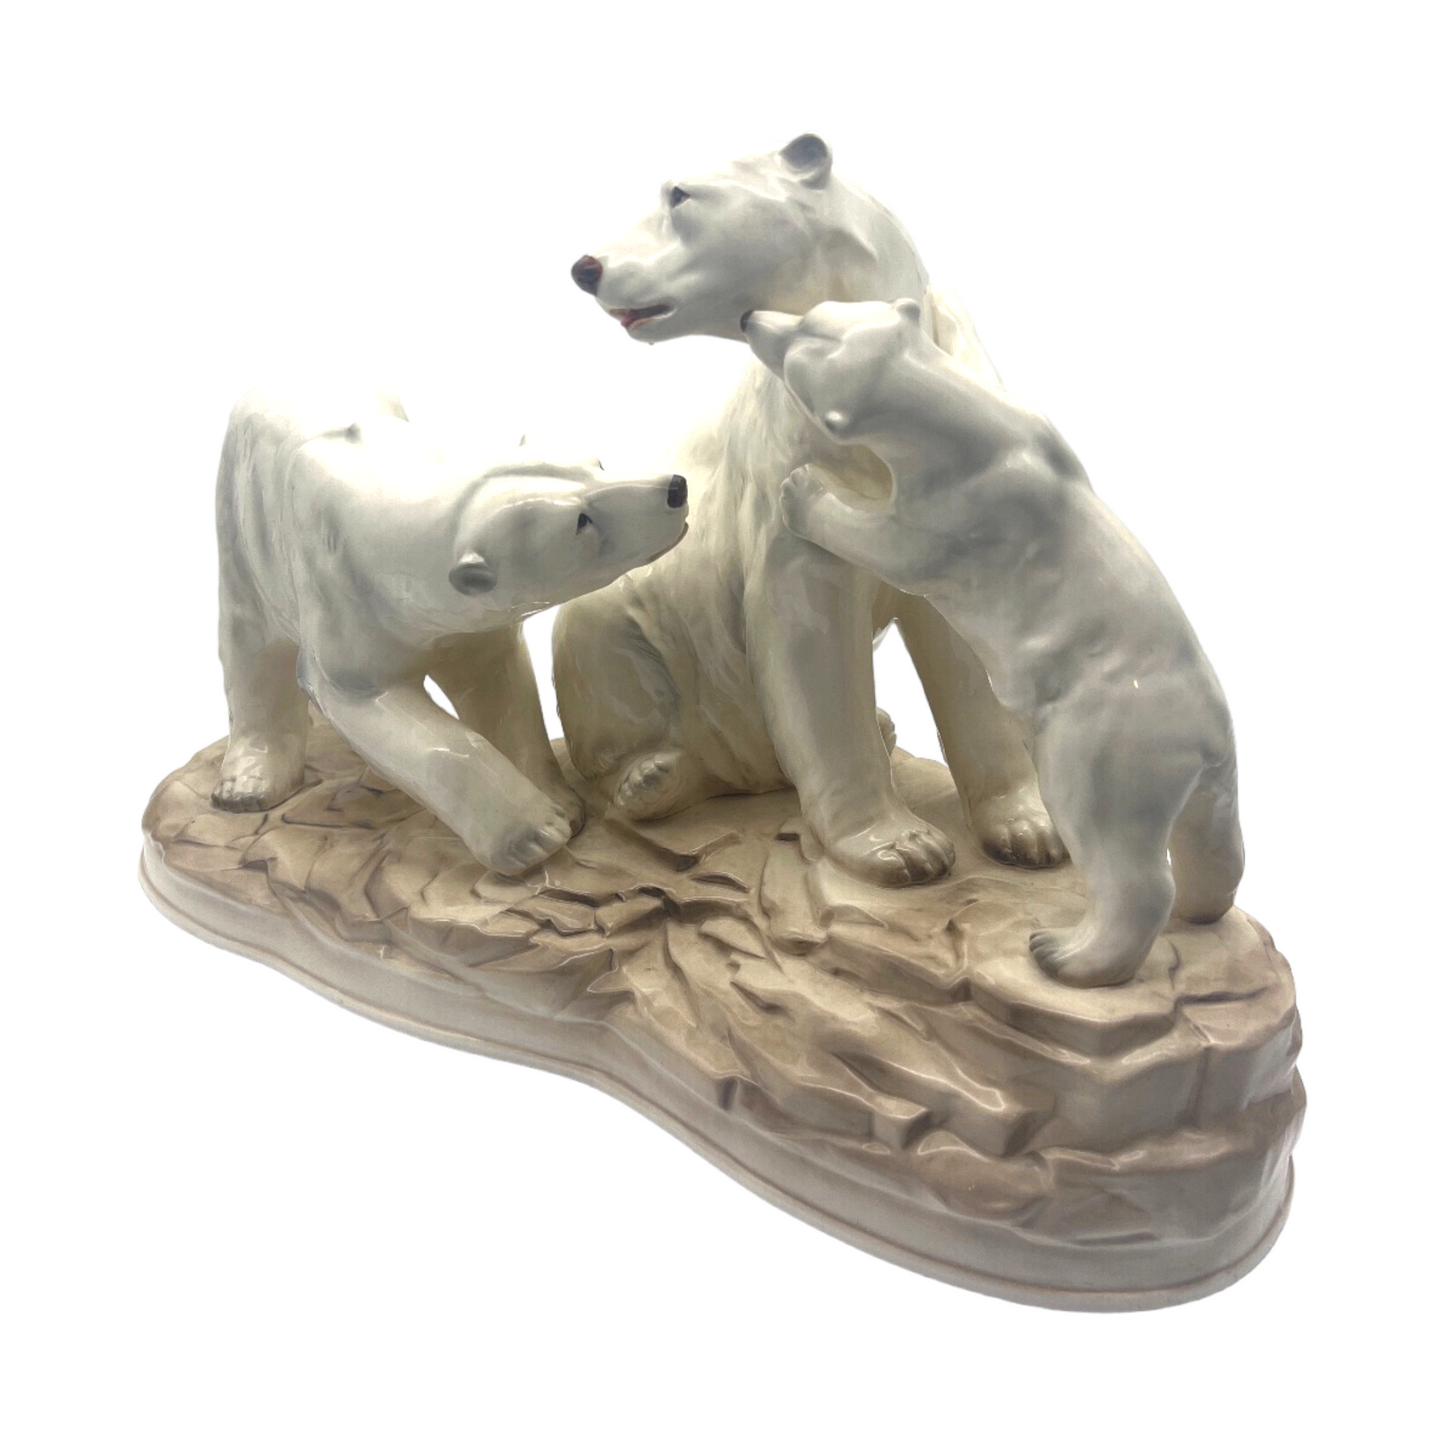 Glazed Porcelain Polar Bear Family - Signed J Stewart - X Large - 8.6" x 18"